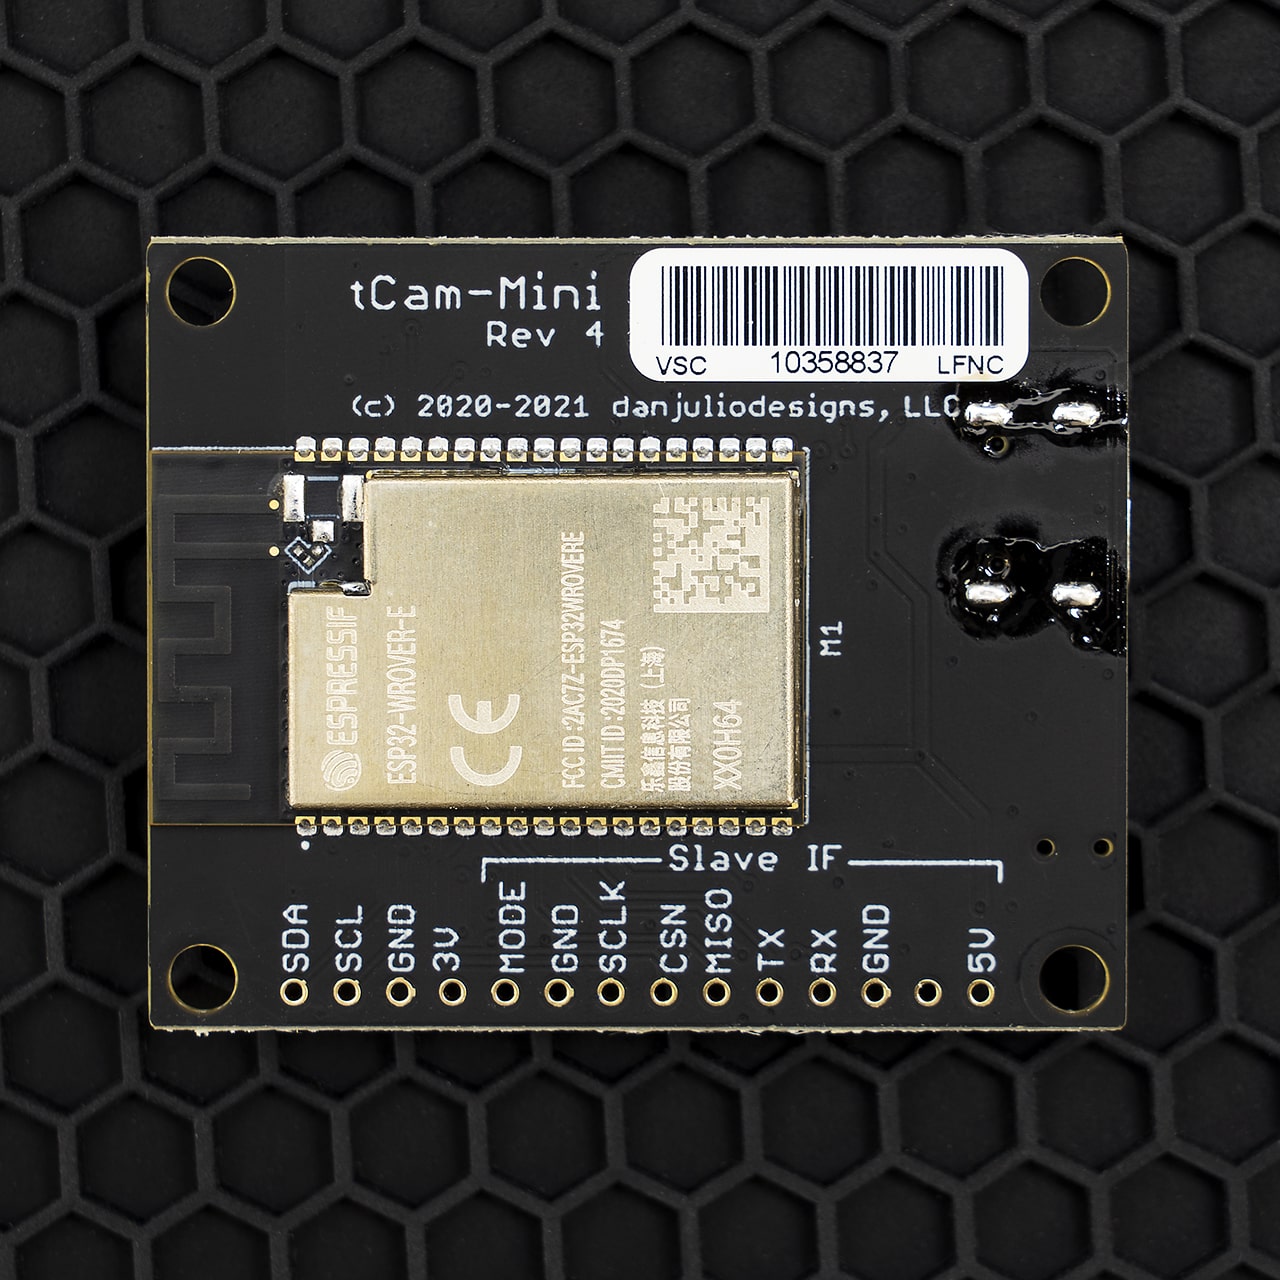 tCam-Mini rev4 - (onboard antenna) Wireless streaming thermal camera board